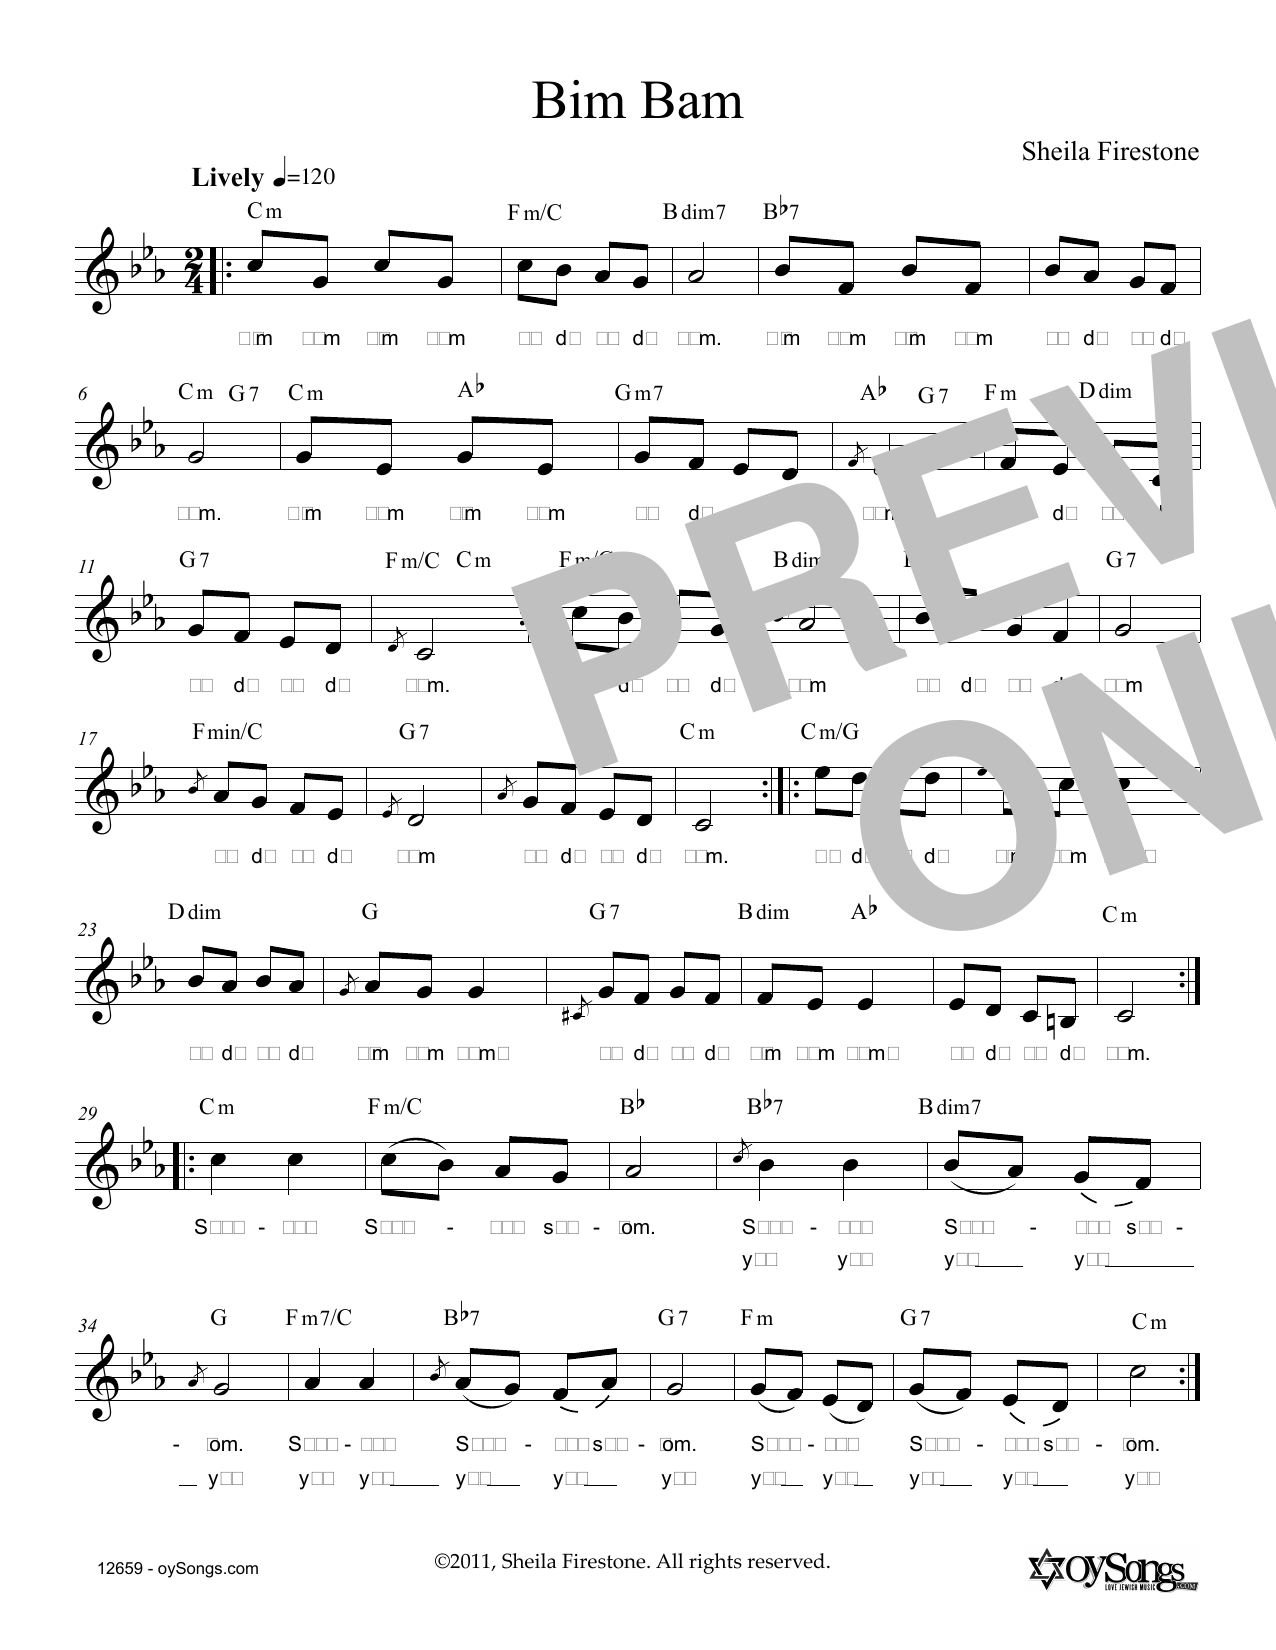 Sheila Firestone Niggun Bim Bam Sheet Music Notes & Chords for Piano, Vocal & Guitar (Right-Hand Melody) - Download or Print PDF